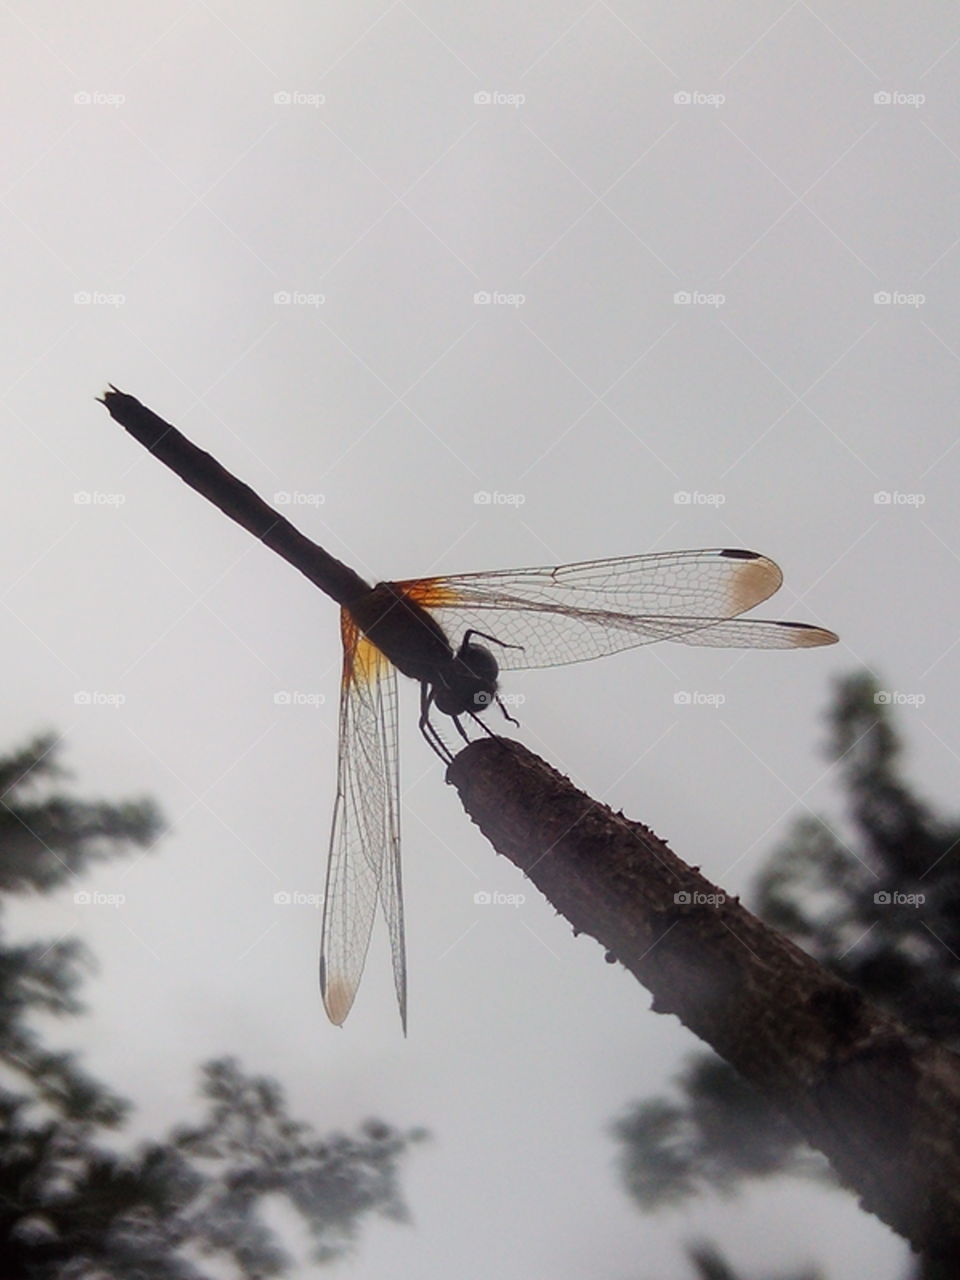 beautiful dragonfly